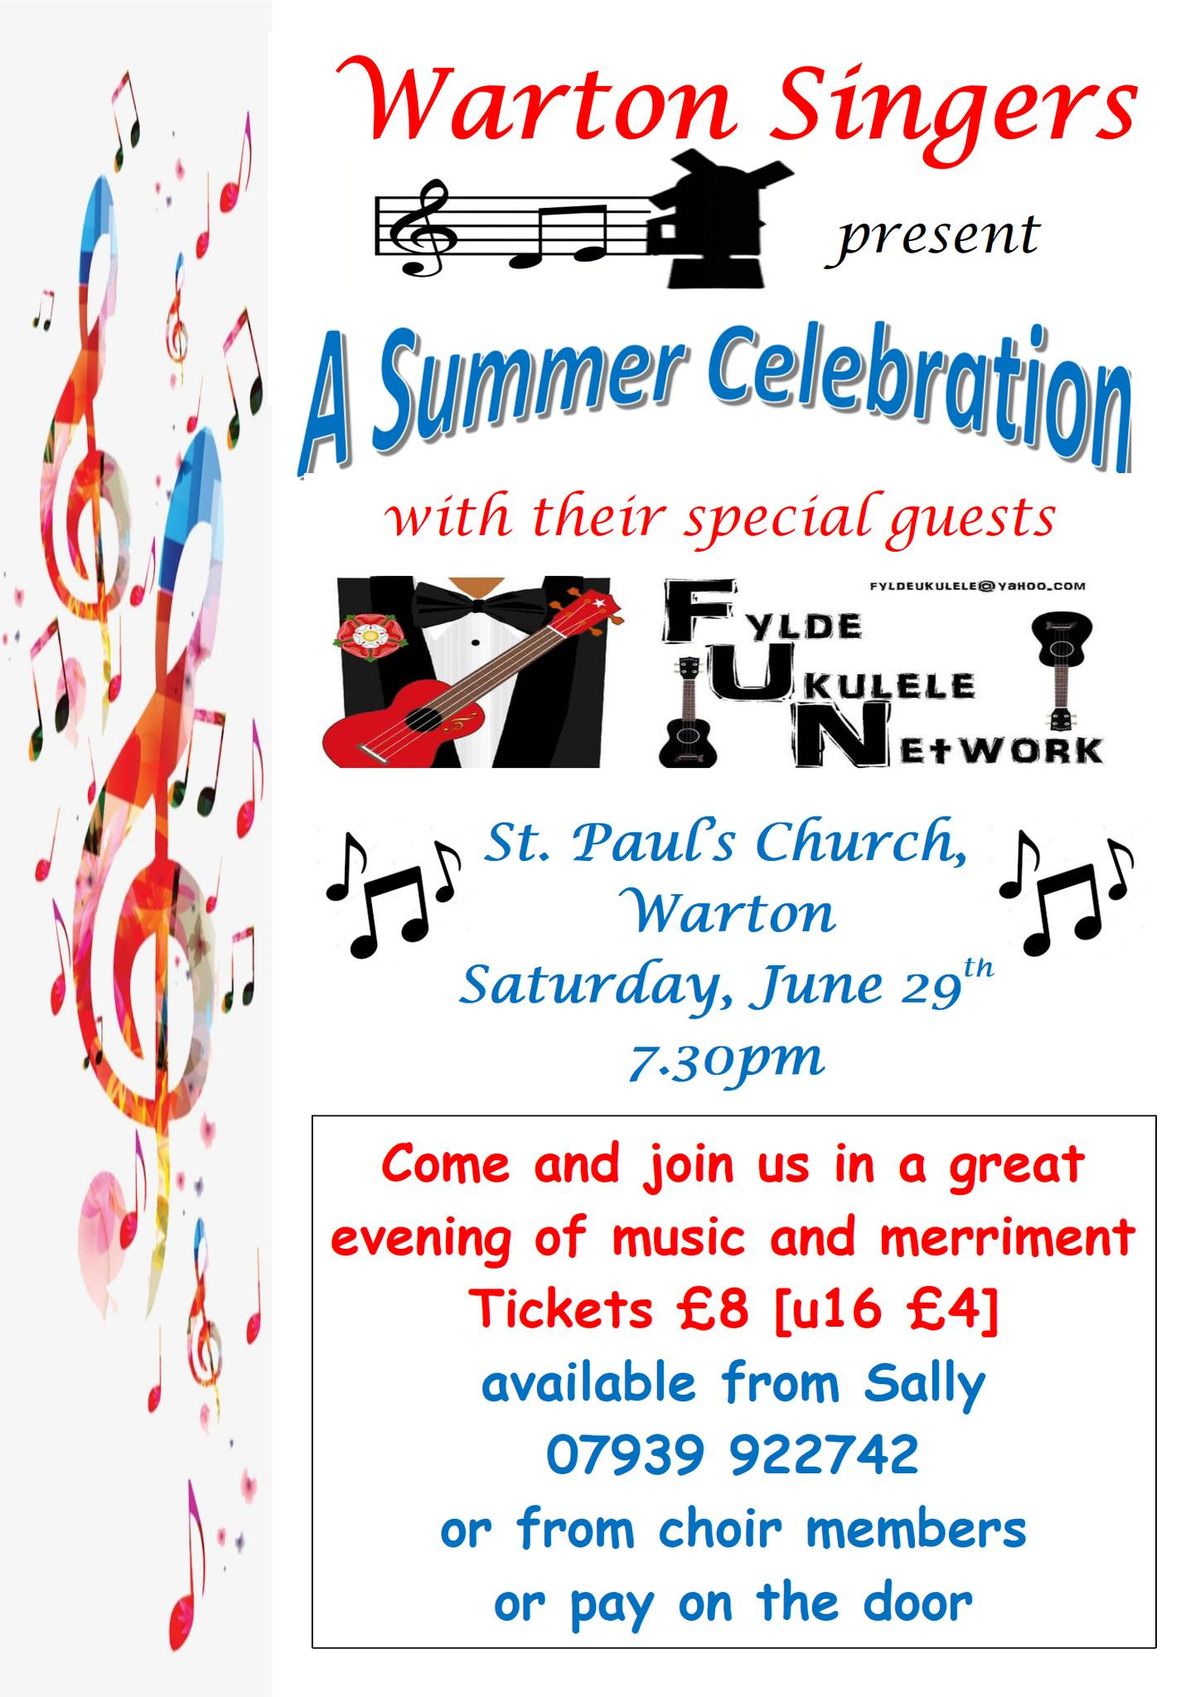 Warton Singers Concert: "A Summer Celebration"